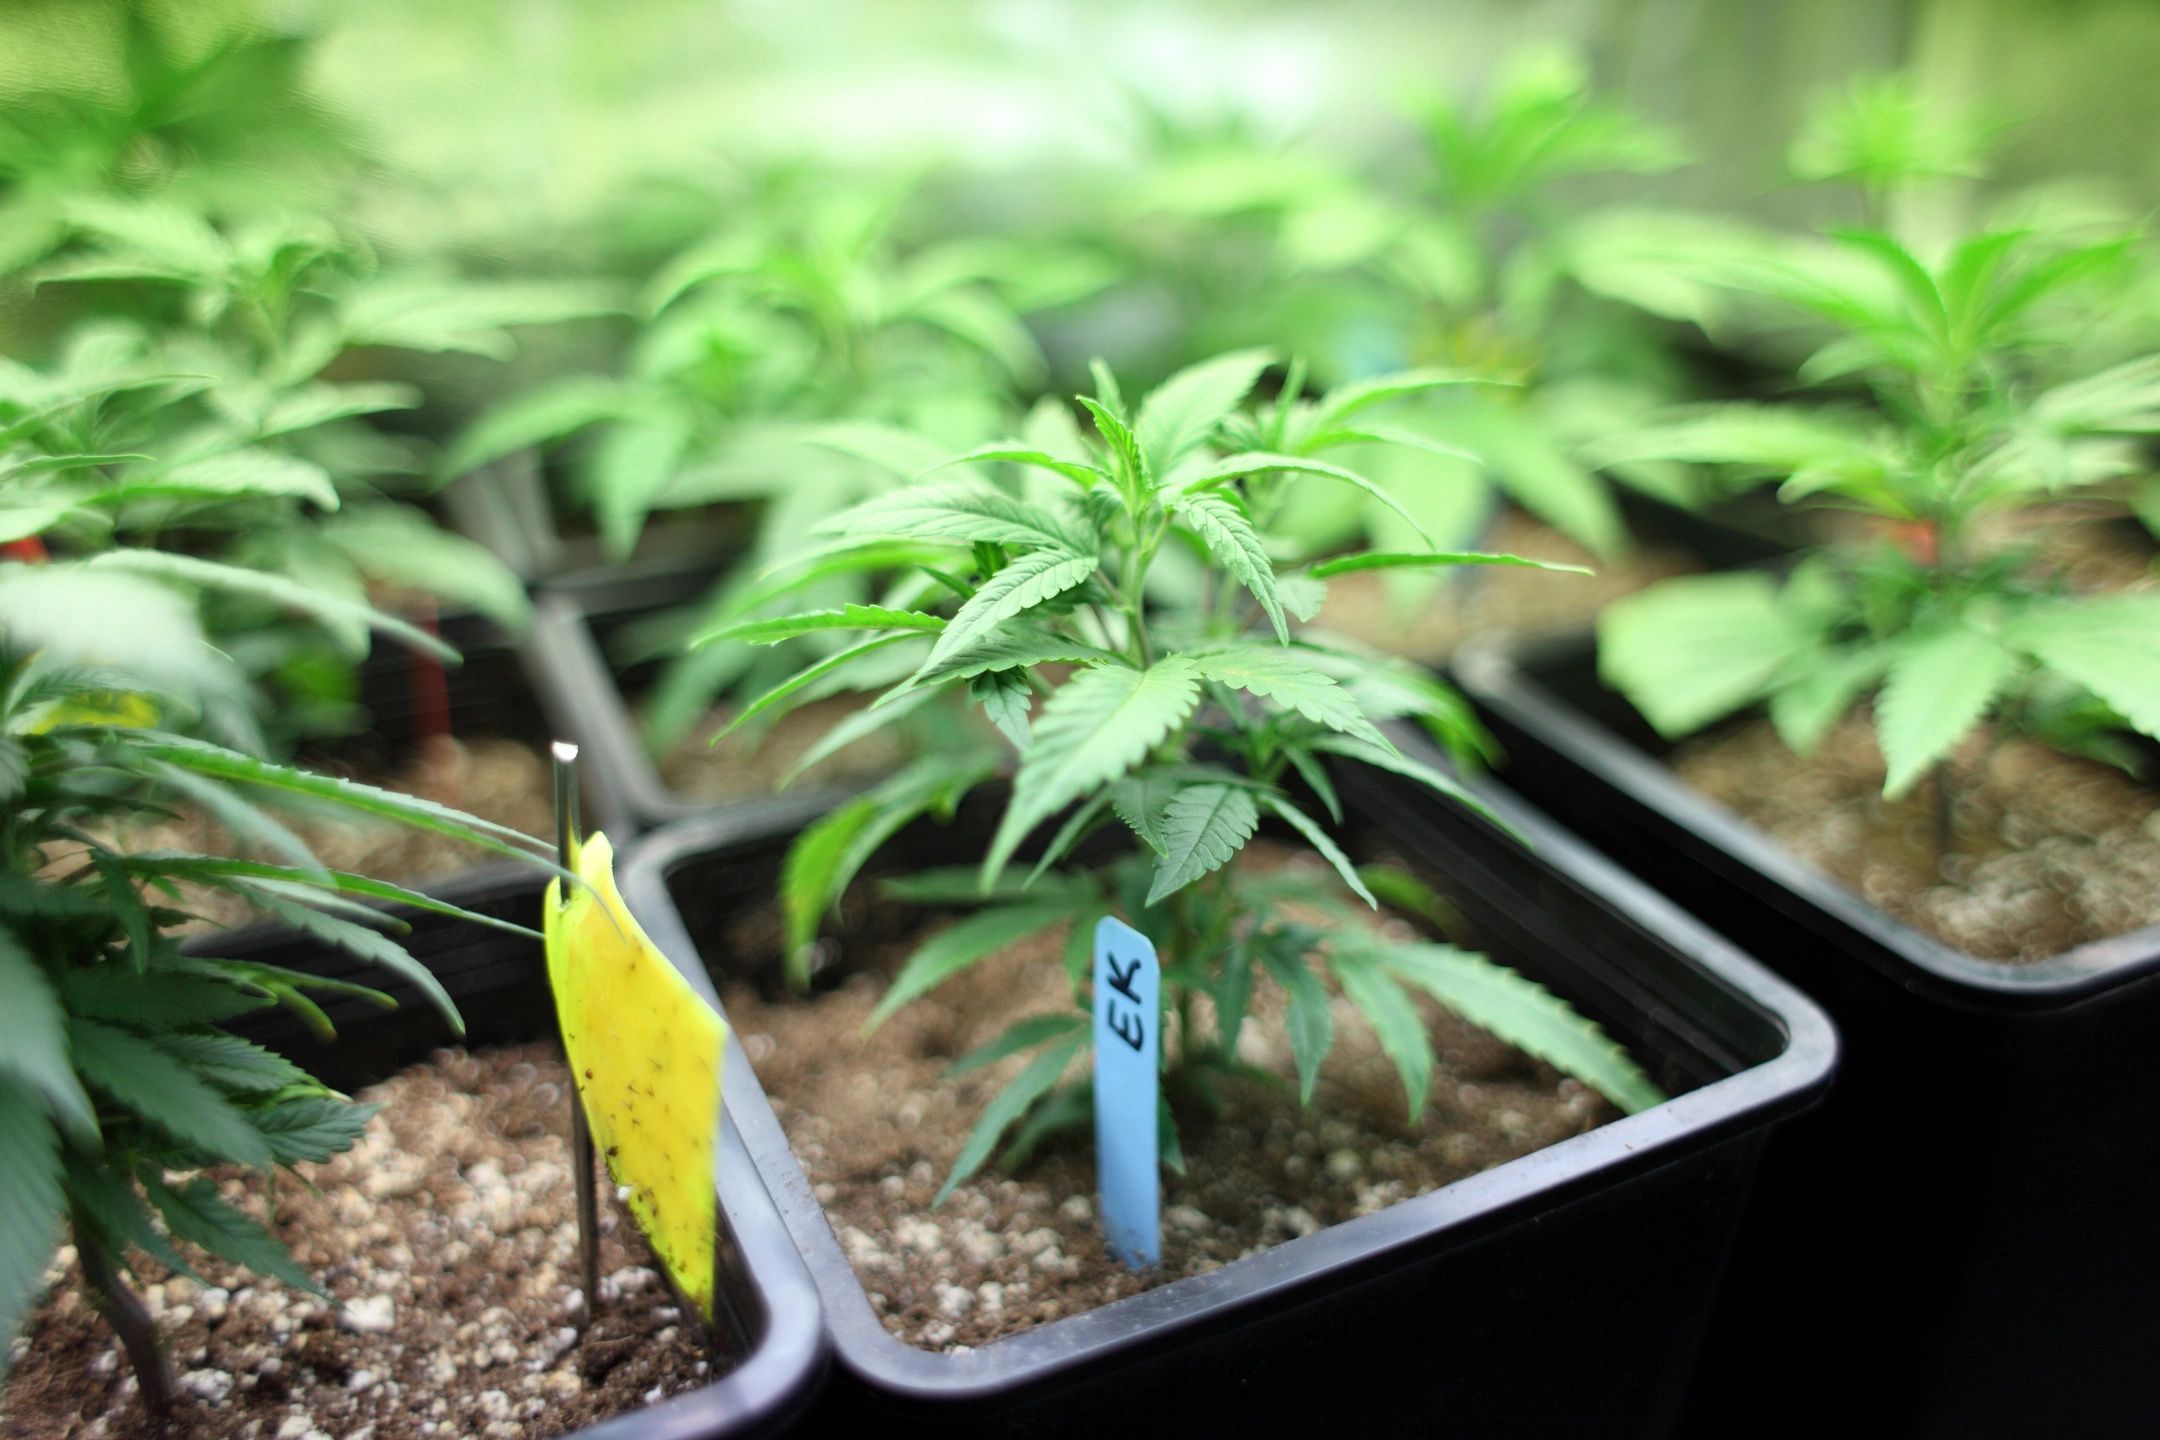 BREAKING: Oregon Utterly Fails to Regulate the Marijuana Market; SAM Calls for Moratorium on Sales